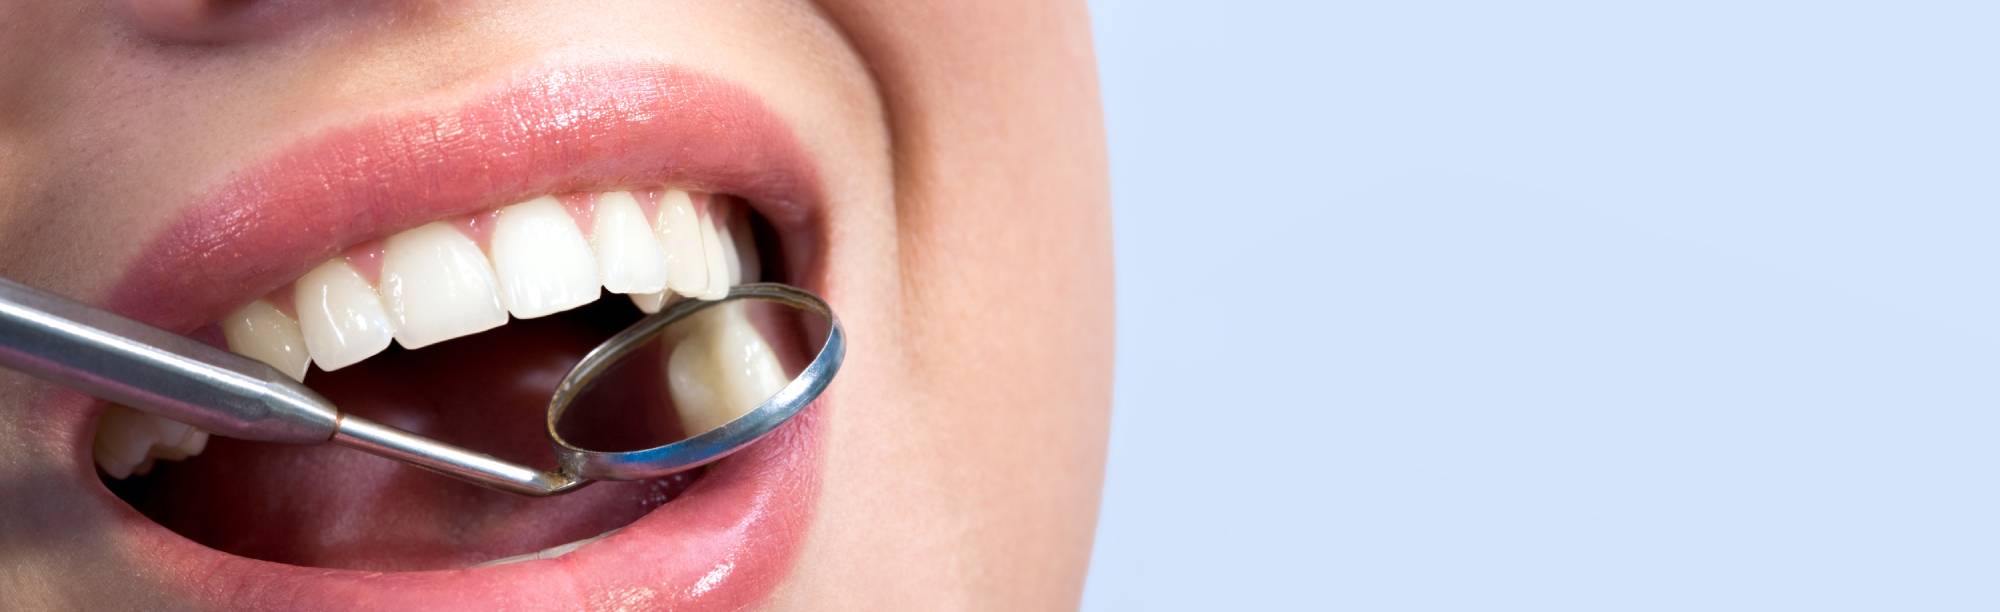 female oral surgery dental check mirror